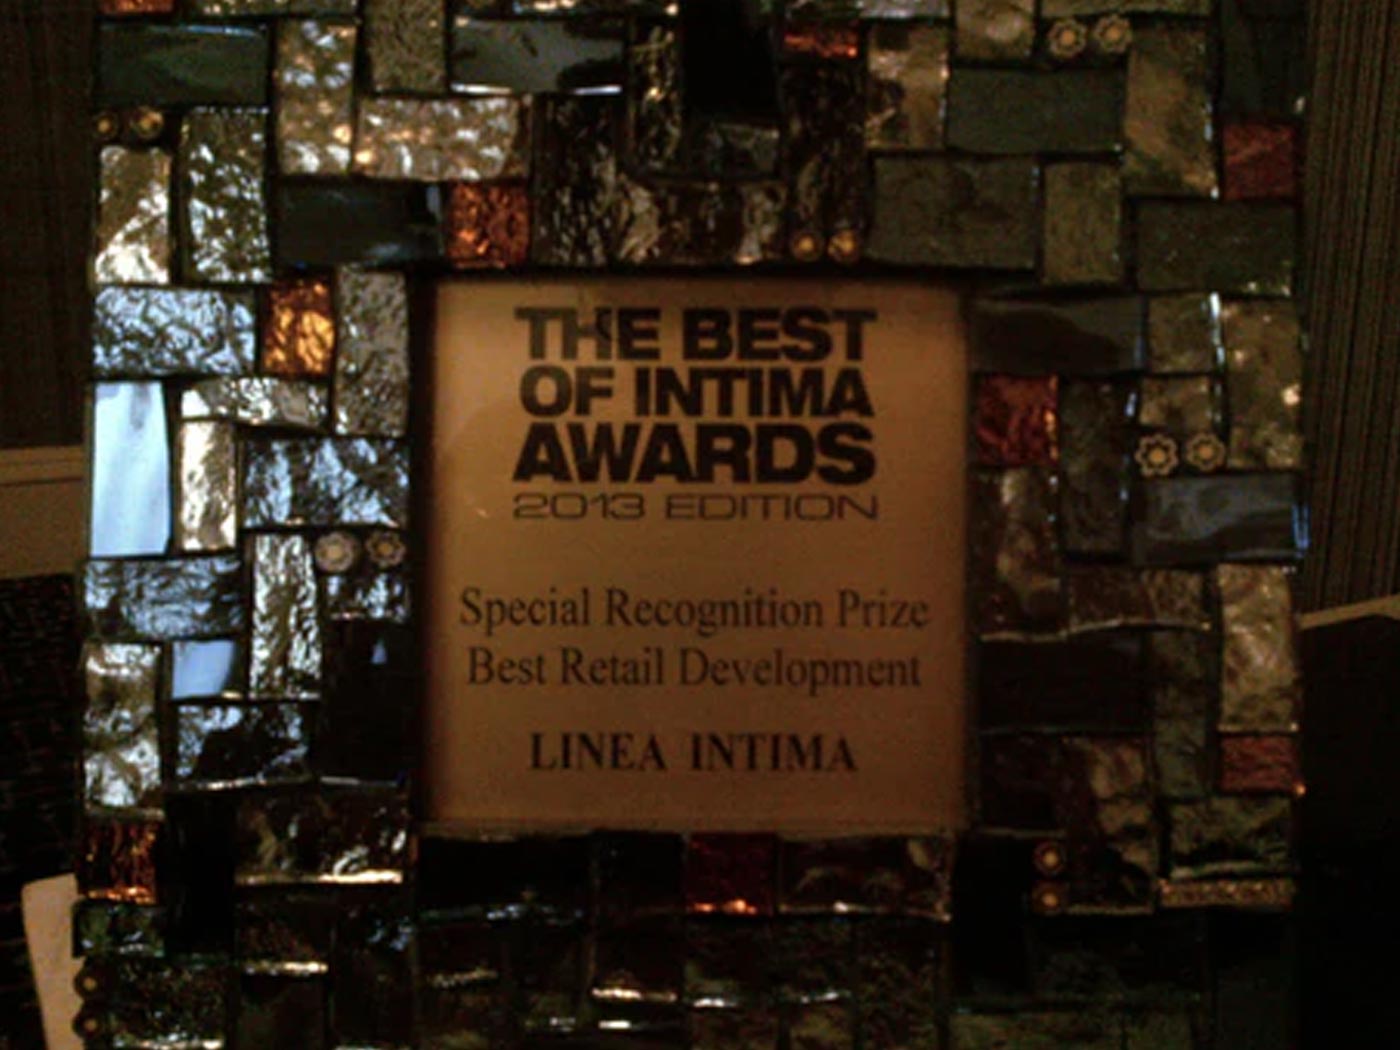 Best of Intima Awards Gala